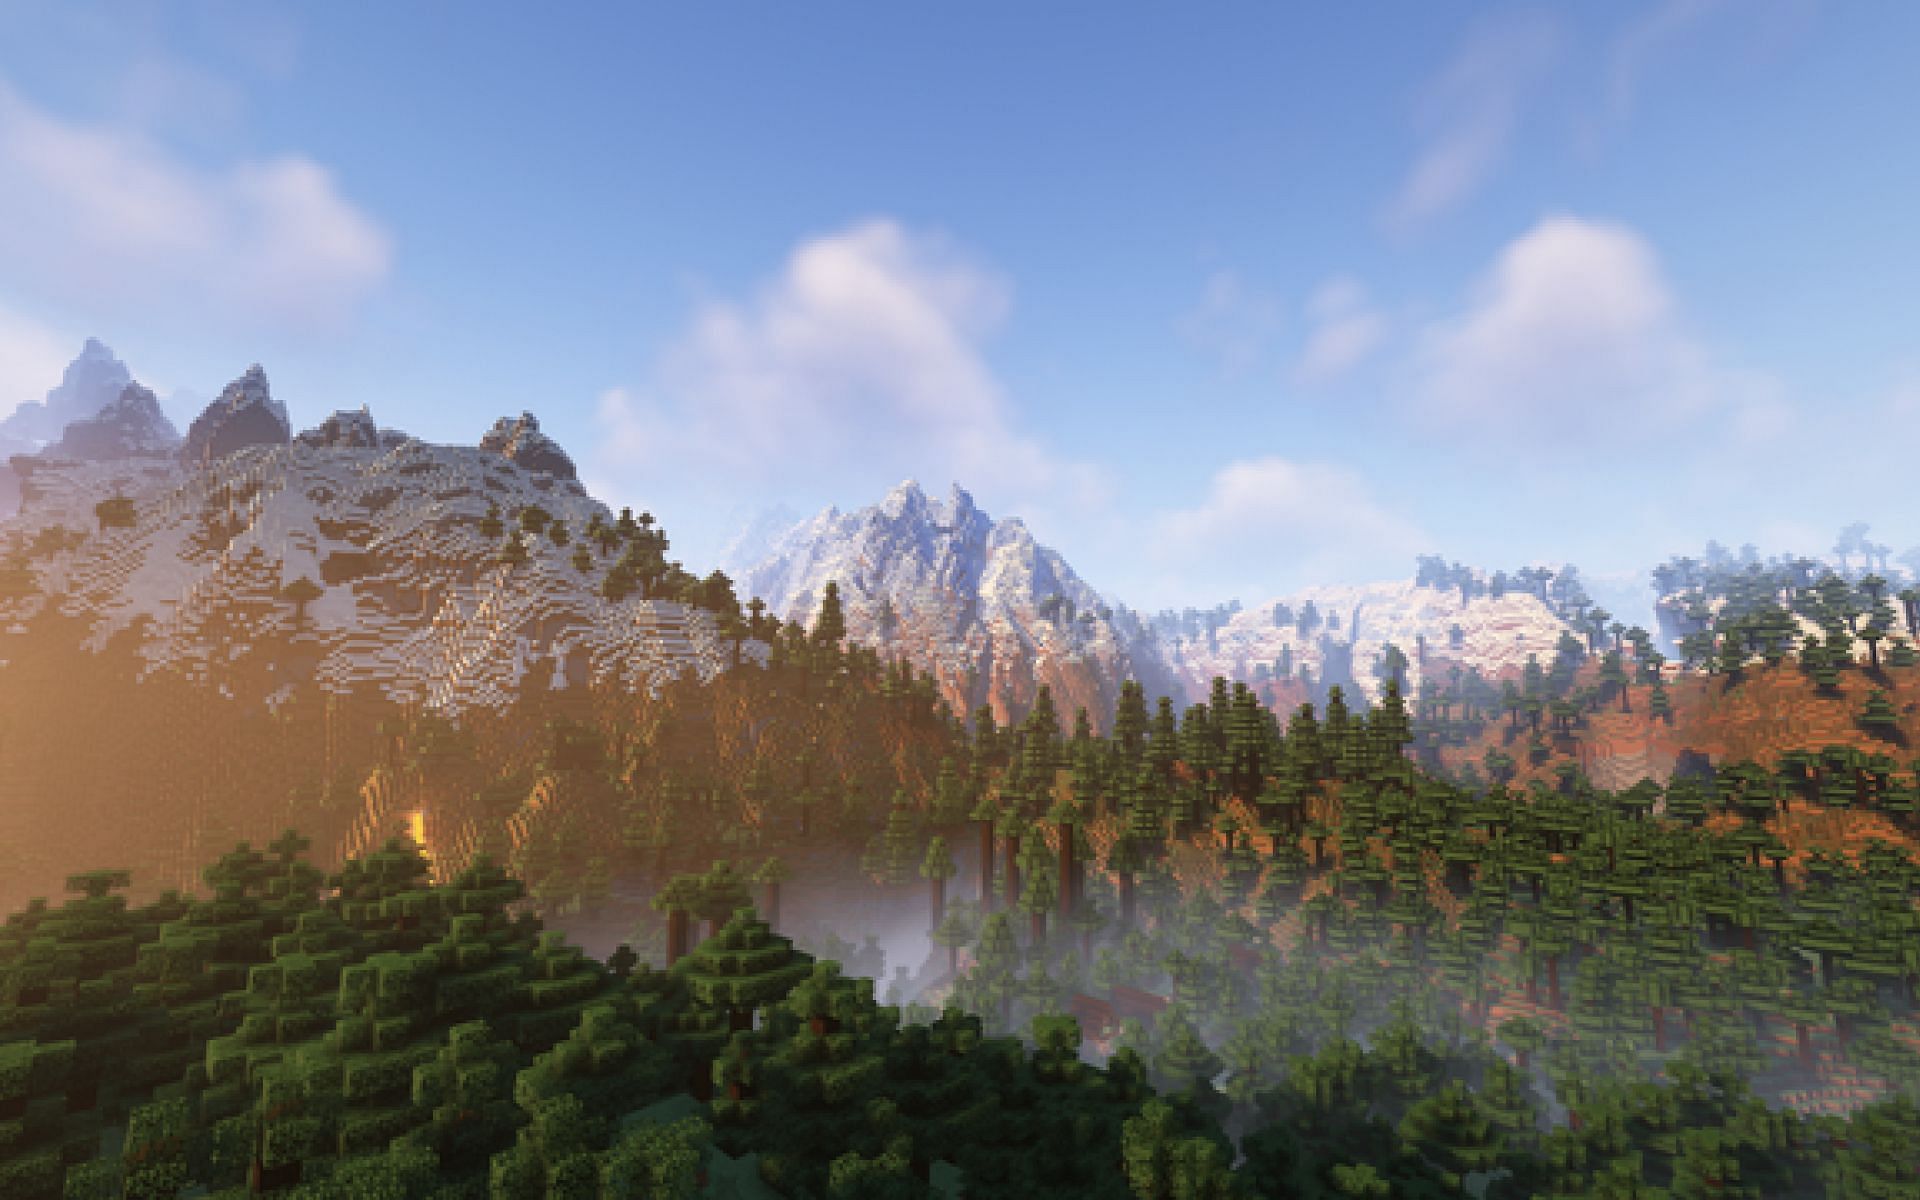 A scenic mountain range in Minecraft. (Image via u/Kidfury000 on Reddit)